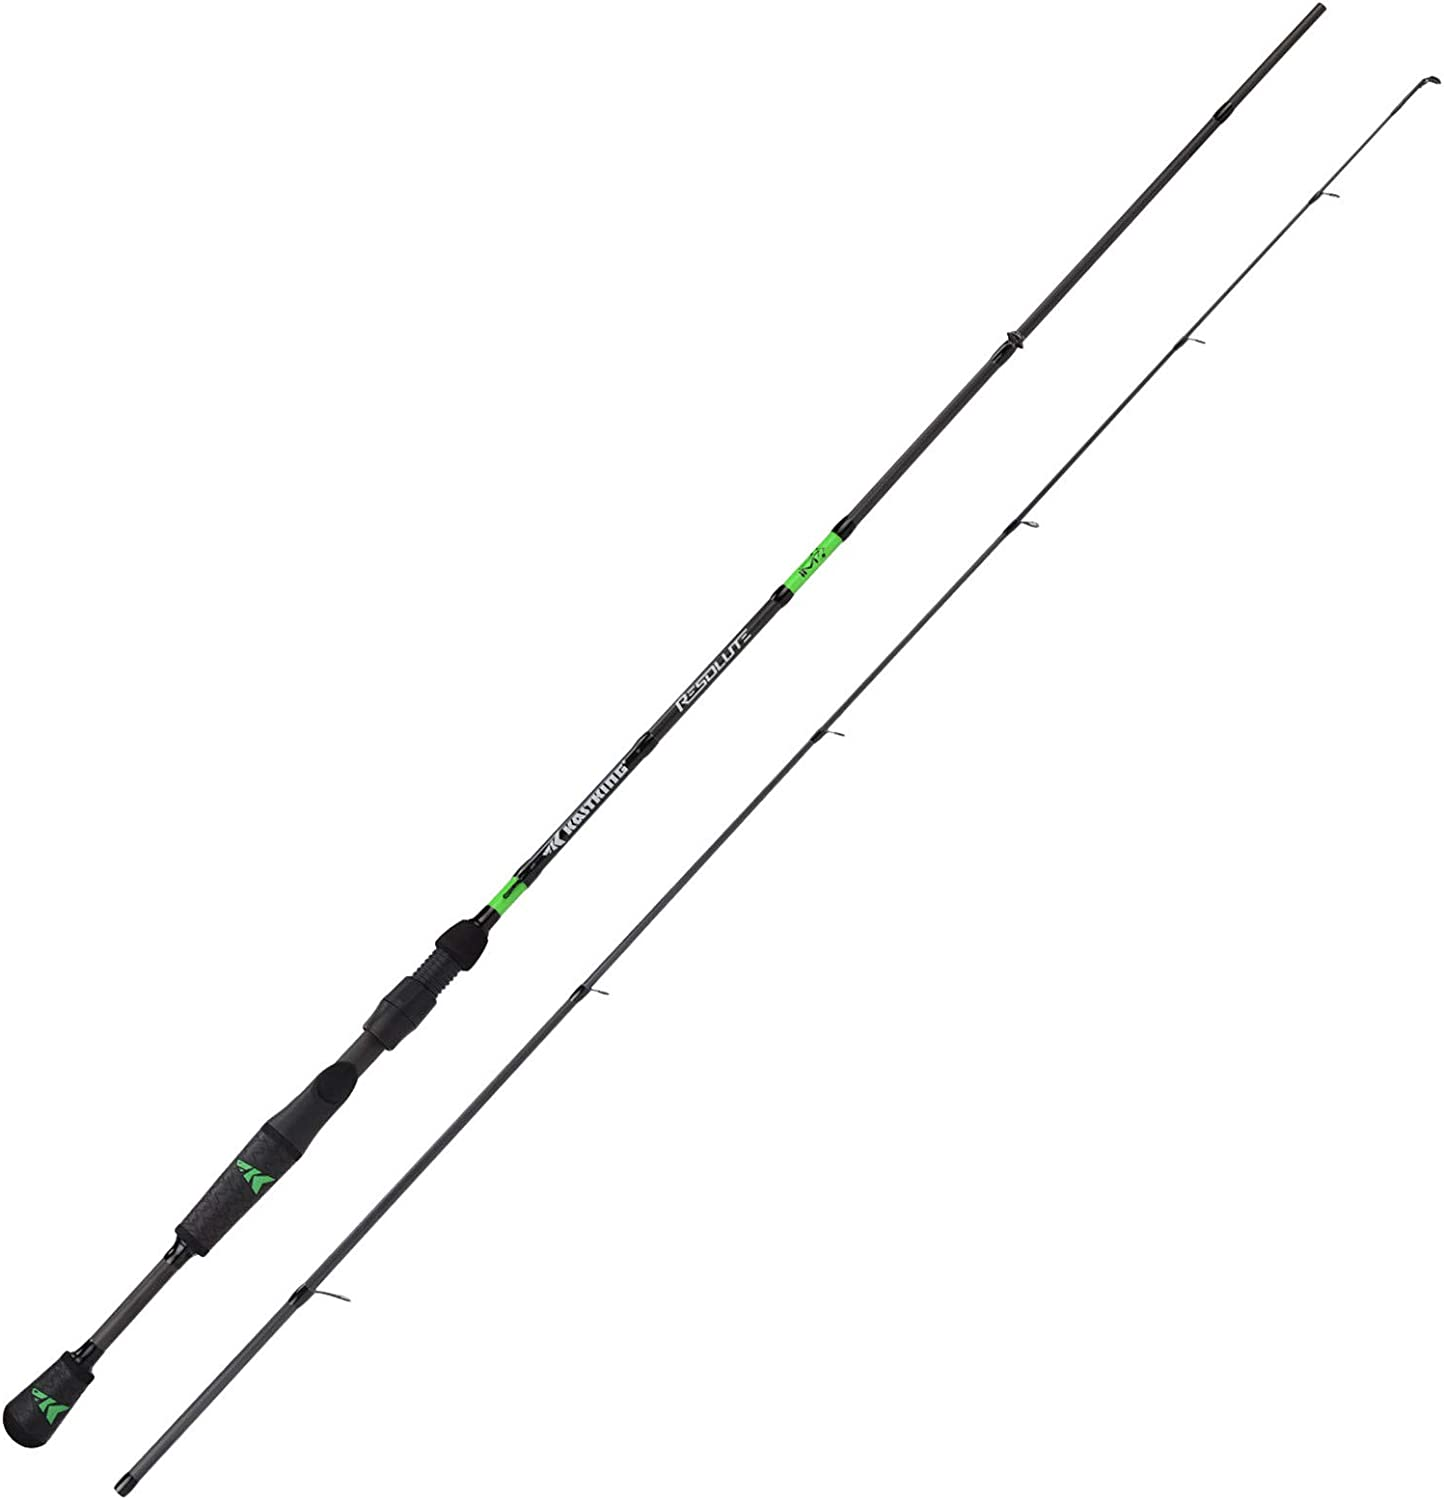 KastKing Resolute Fishing Rods - Best Ultralight Spincast Rod